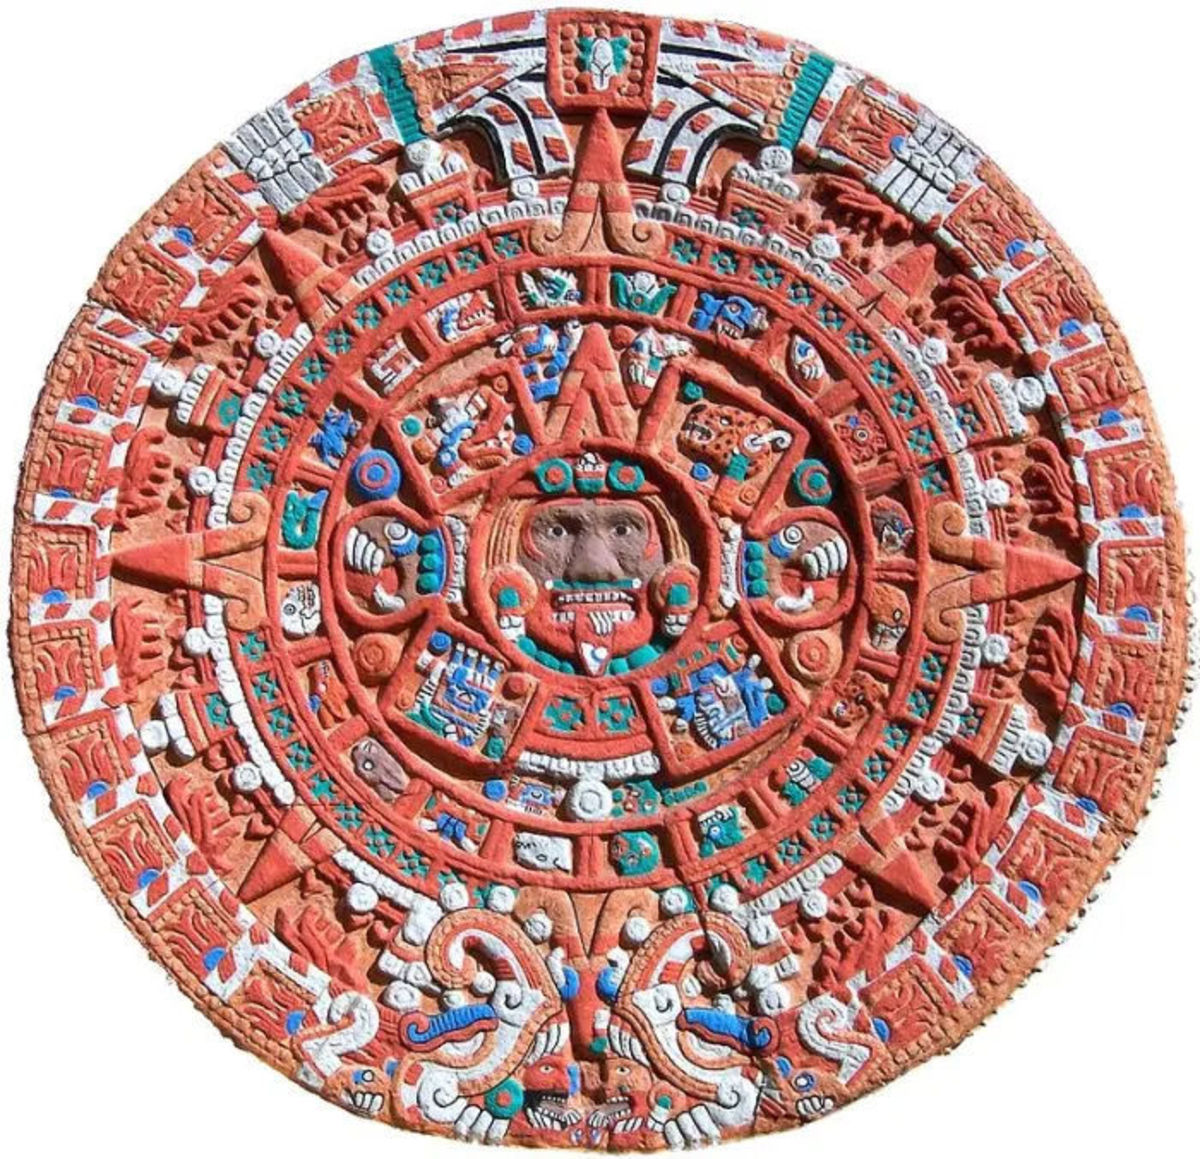 Aztec Glyphs That Make Great Tattoos